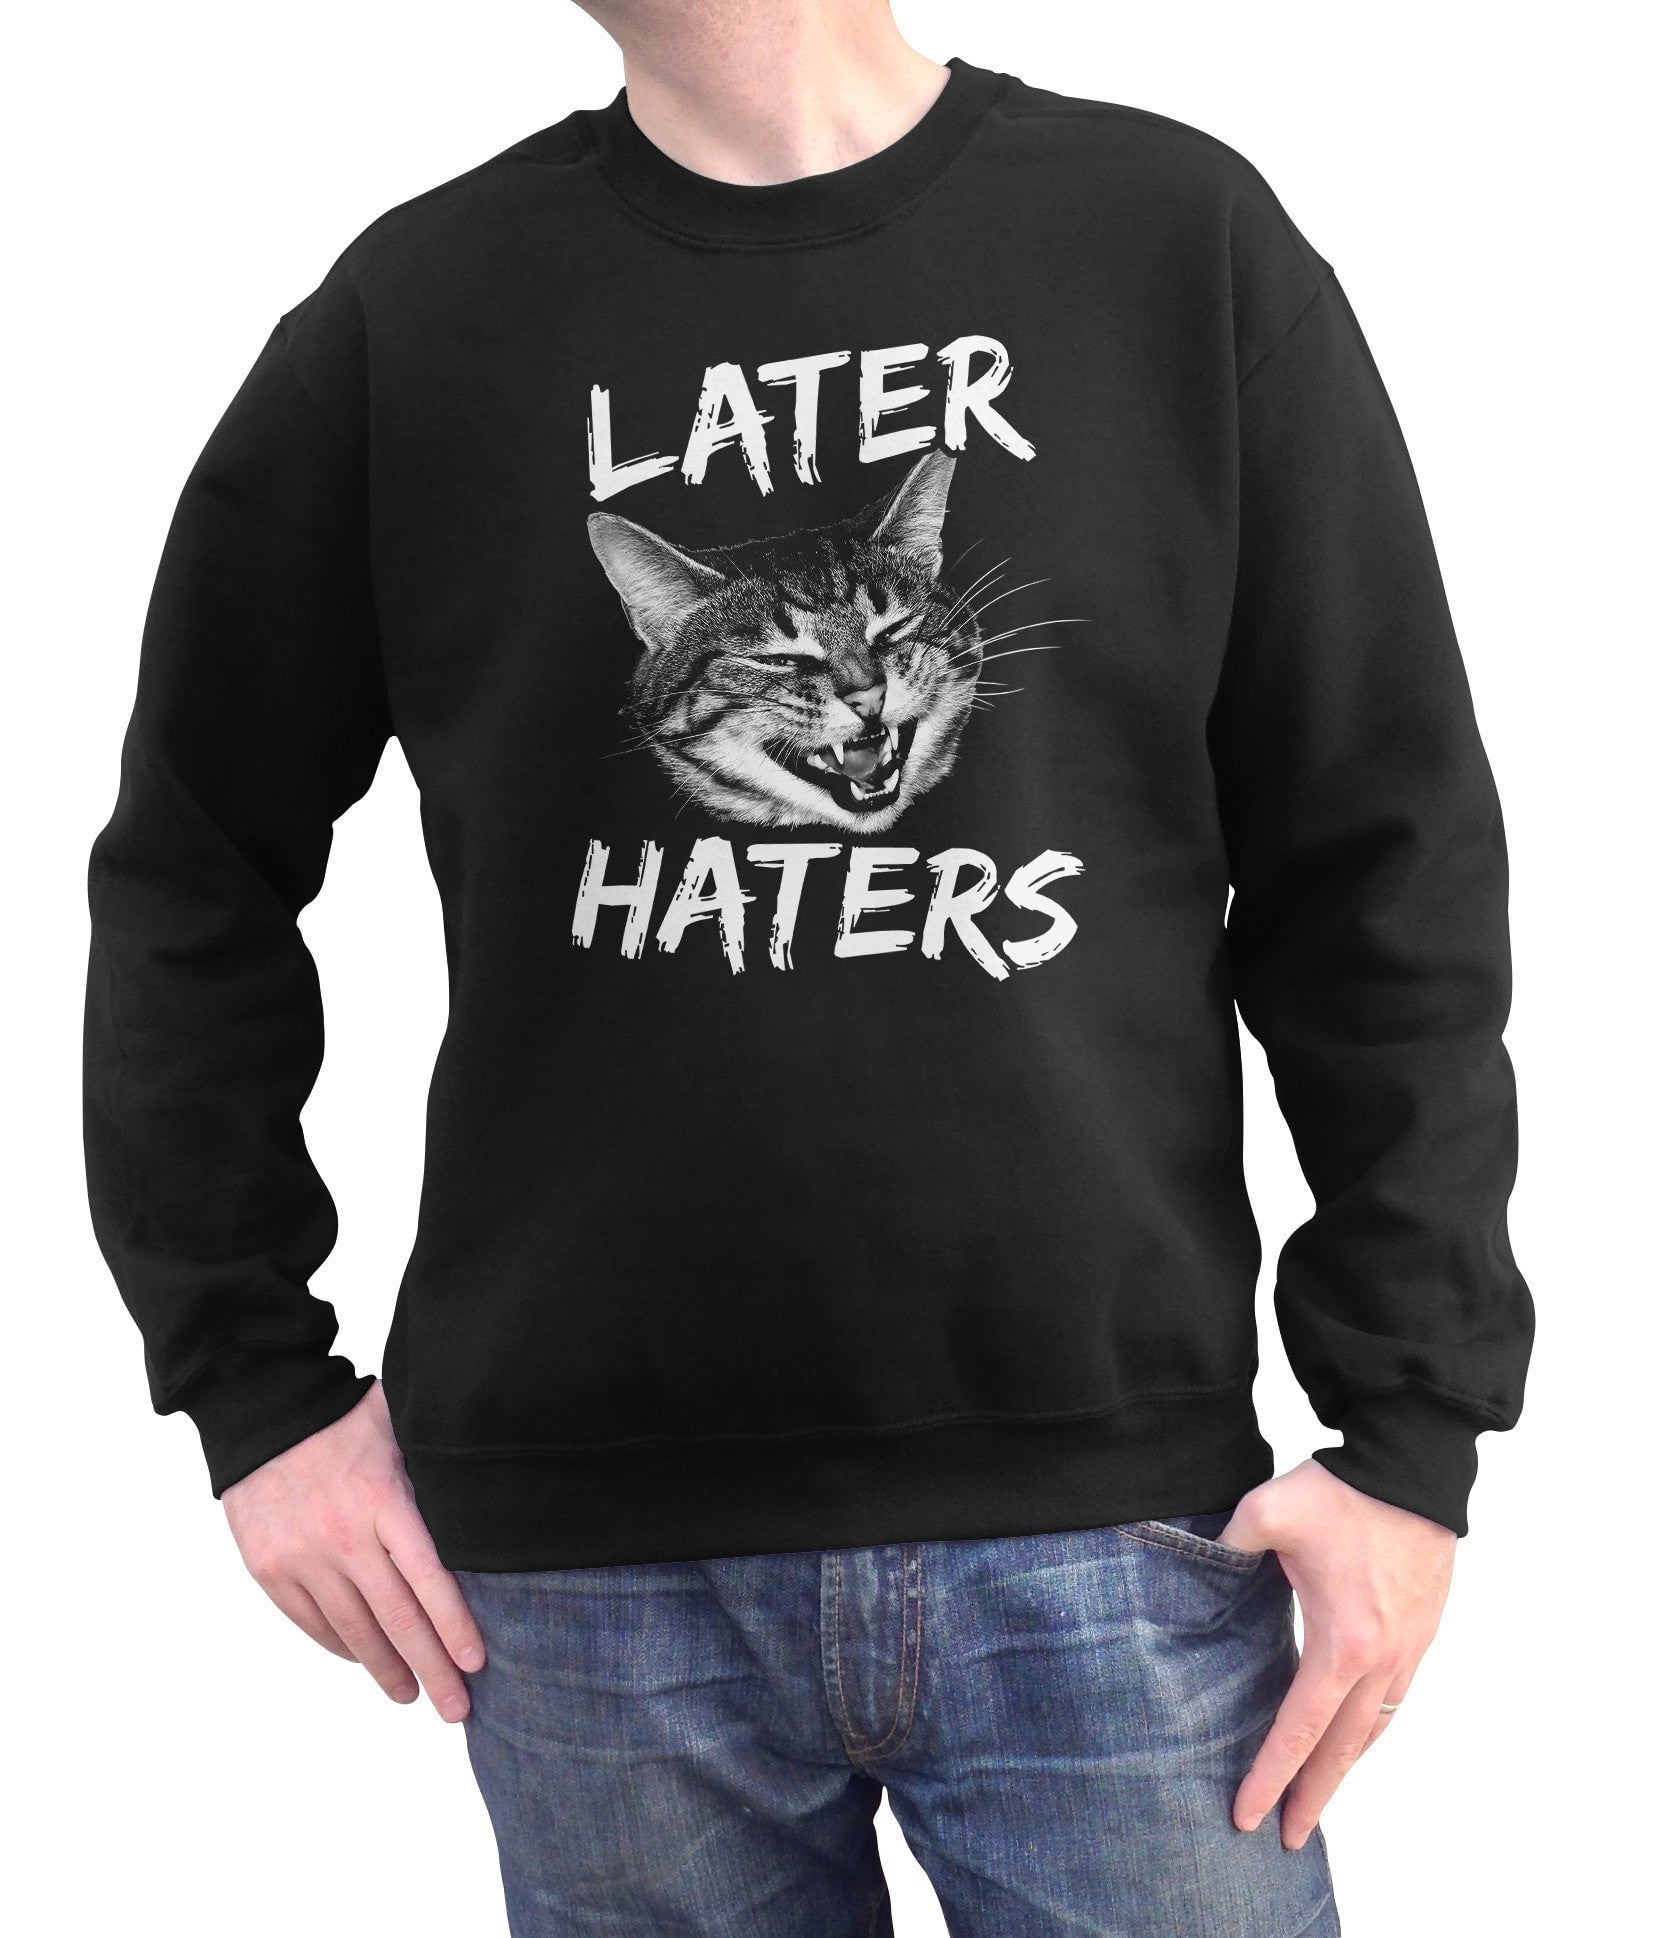 Unisex Later Haters Sweatshirt Funny Cat Shirt